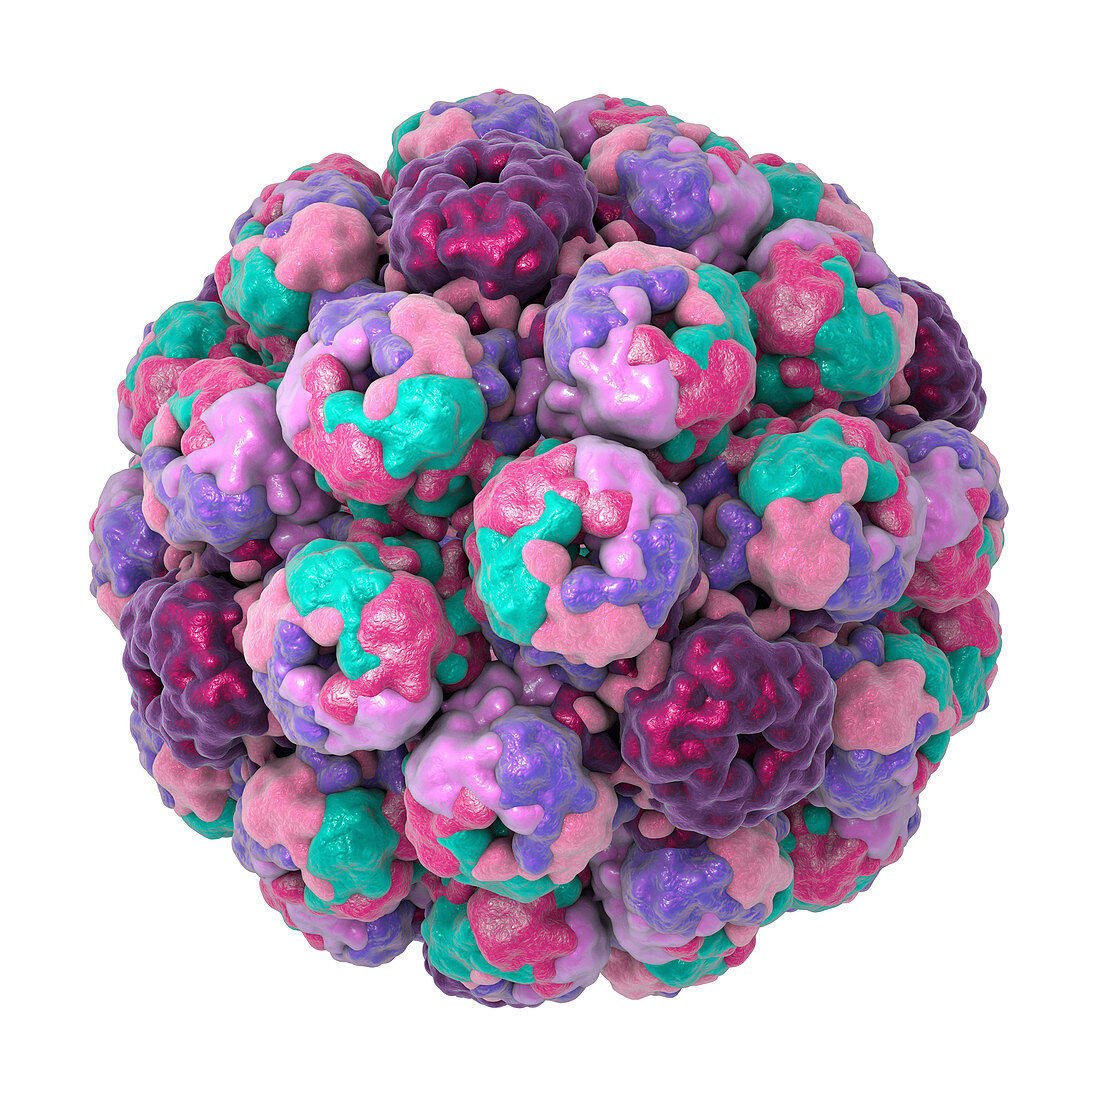 Polyoma BK virus, illustration